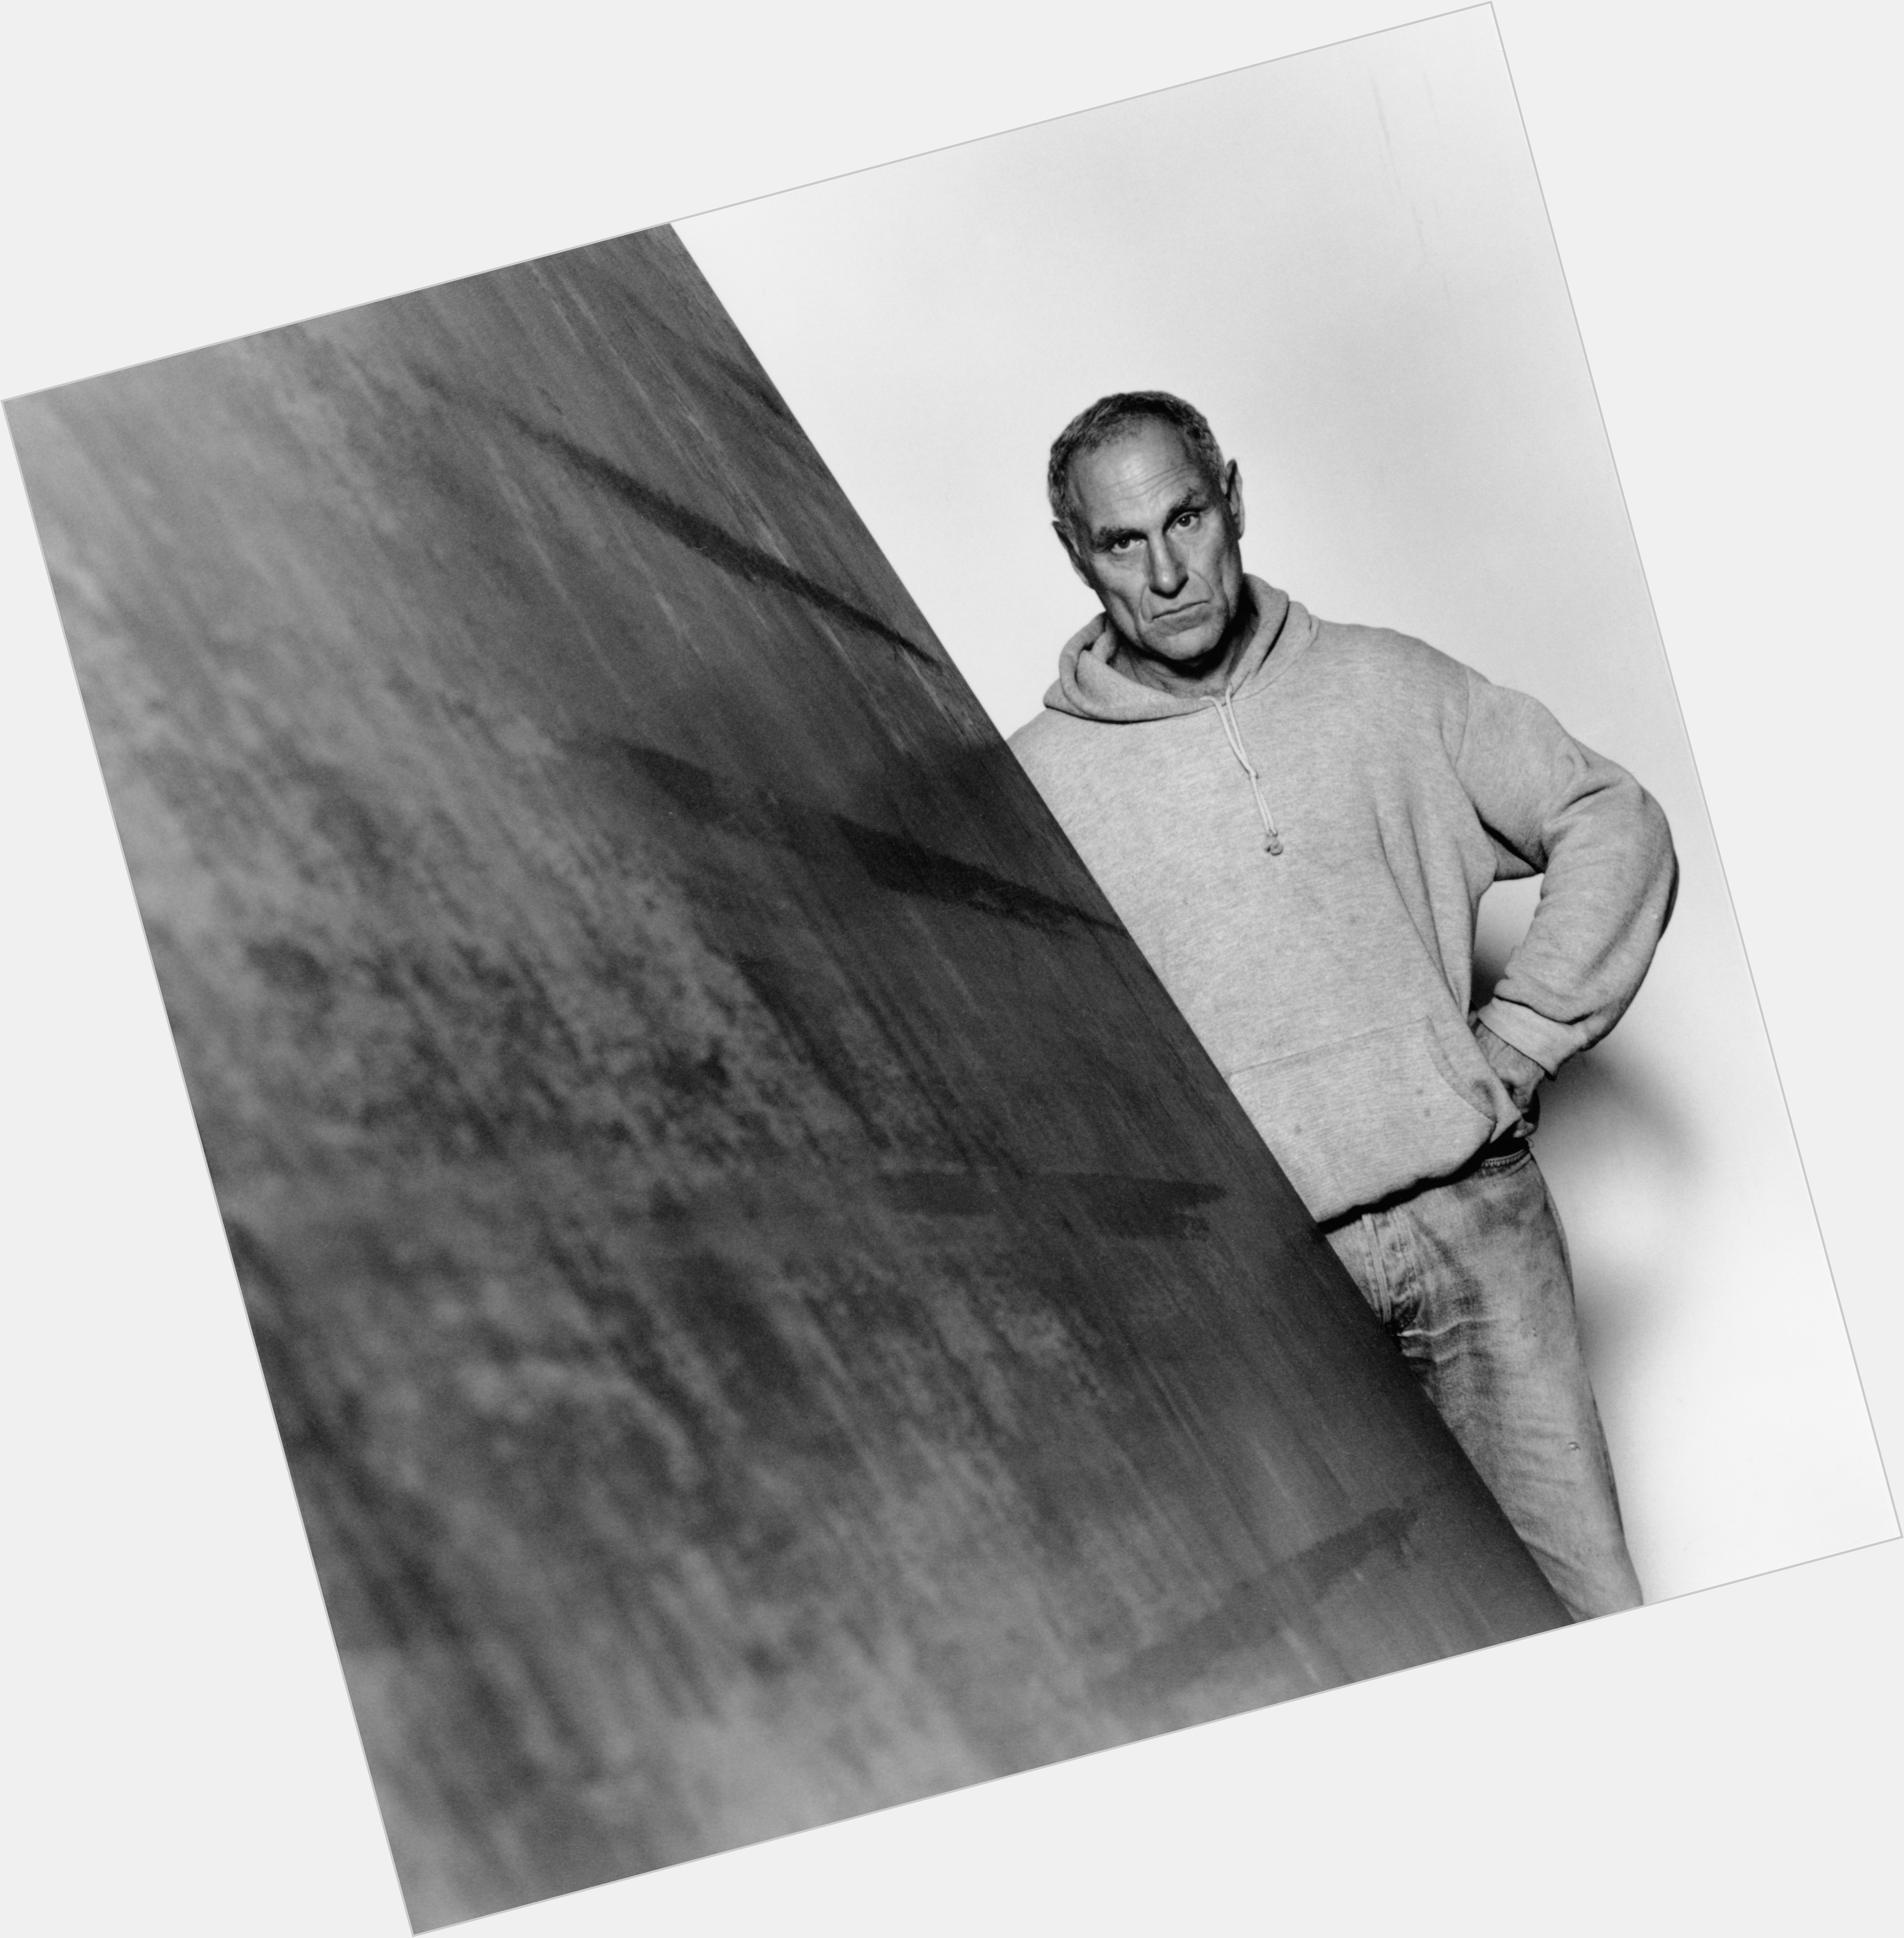 Richard Serra dating 2